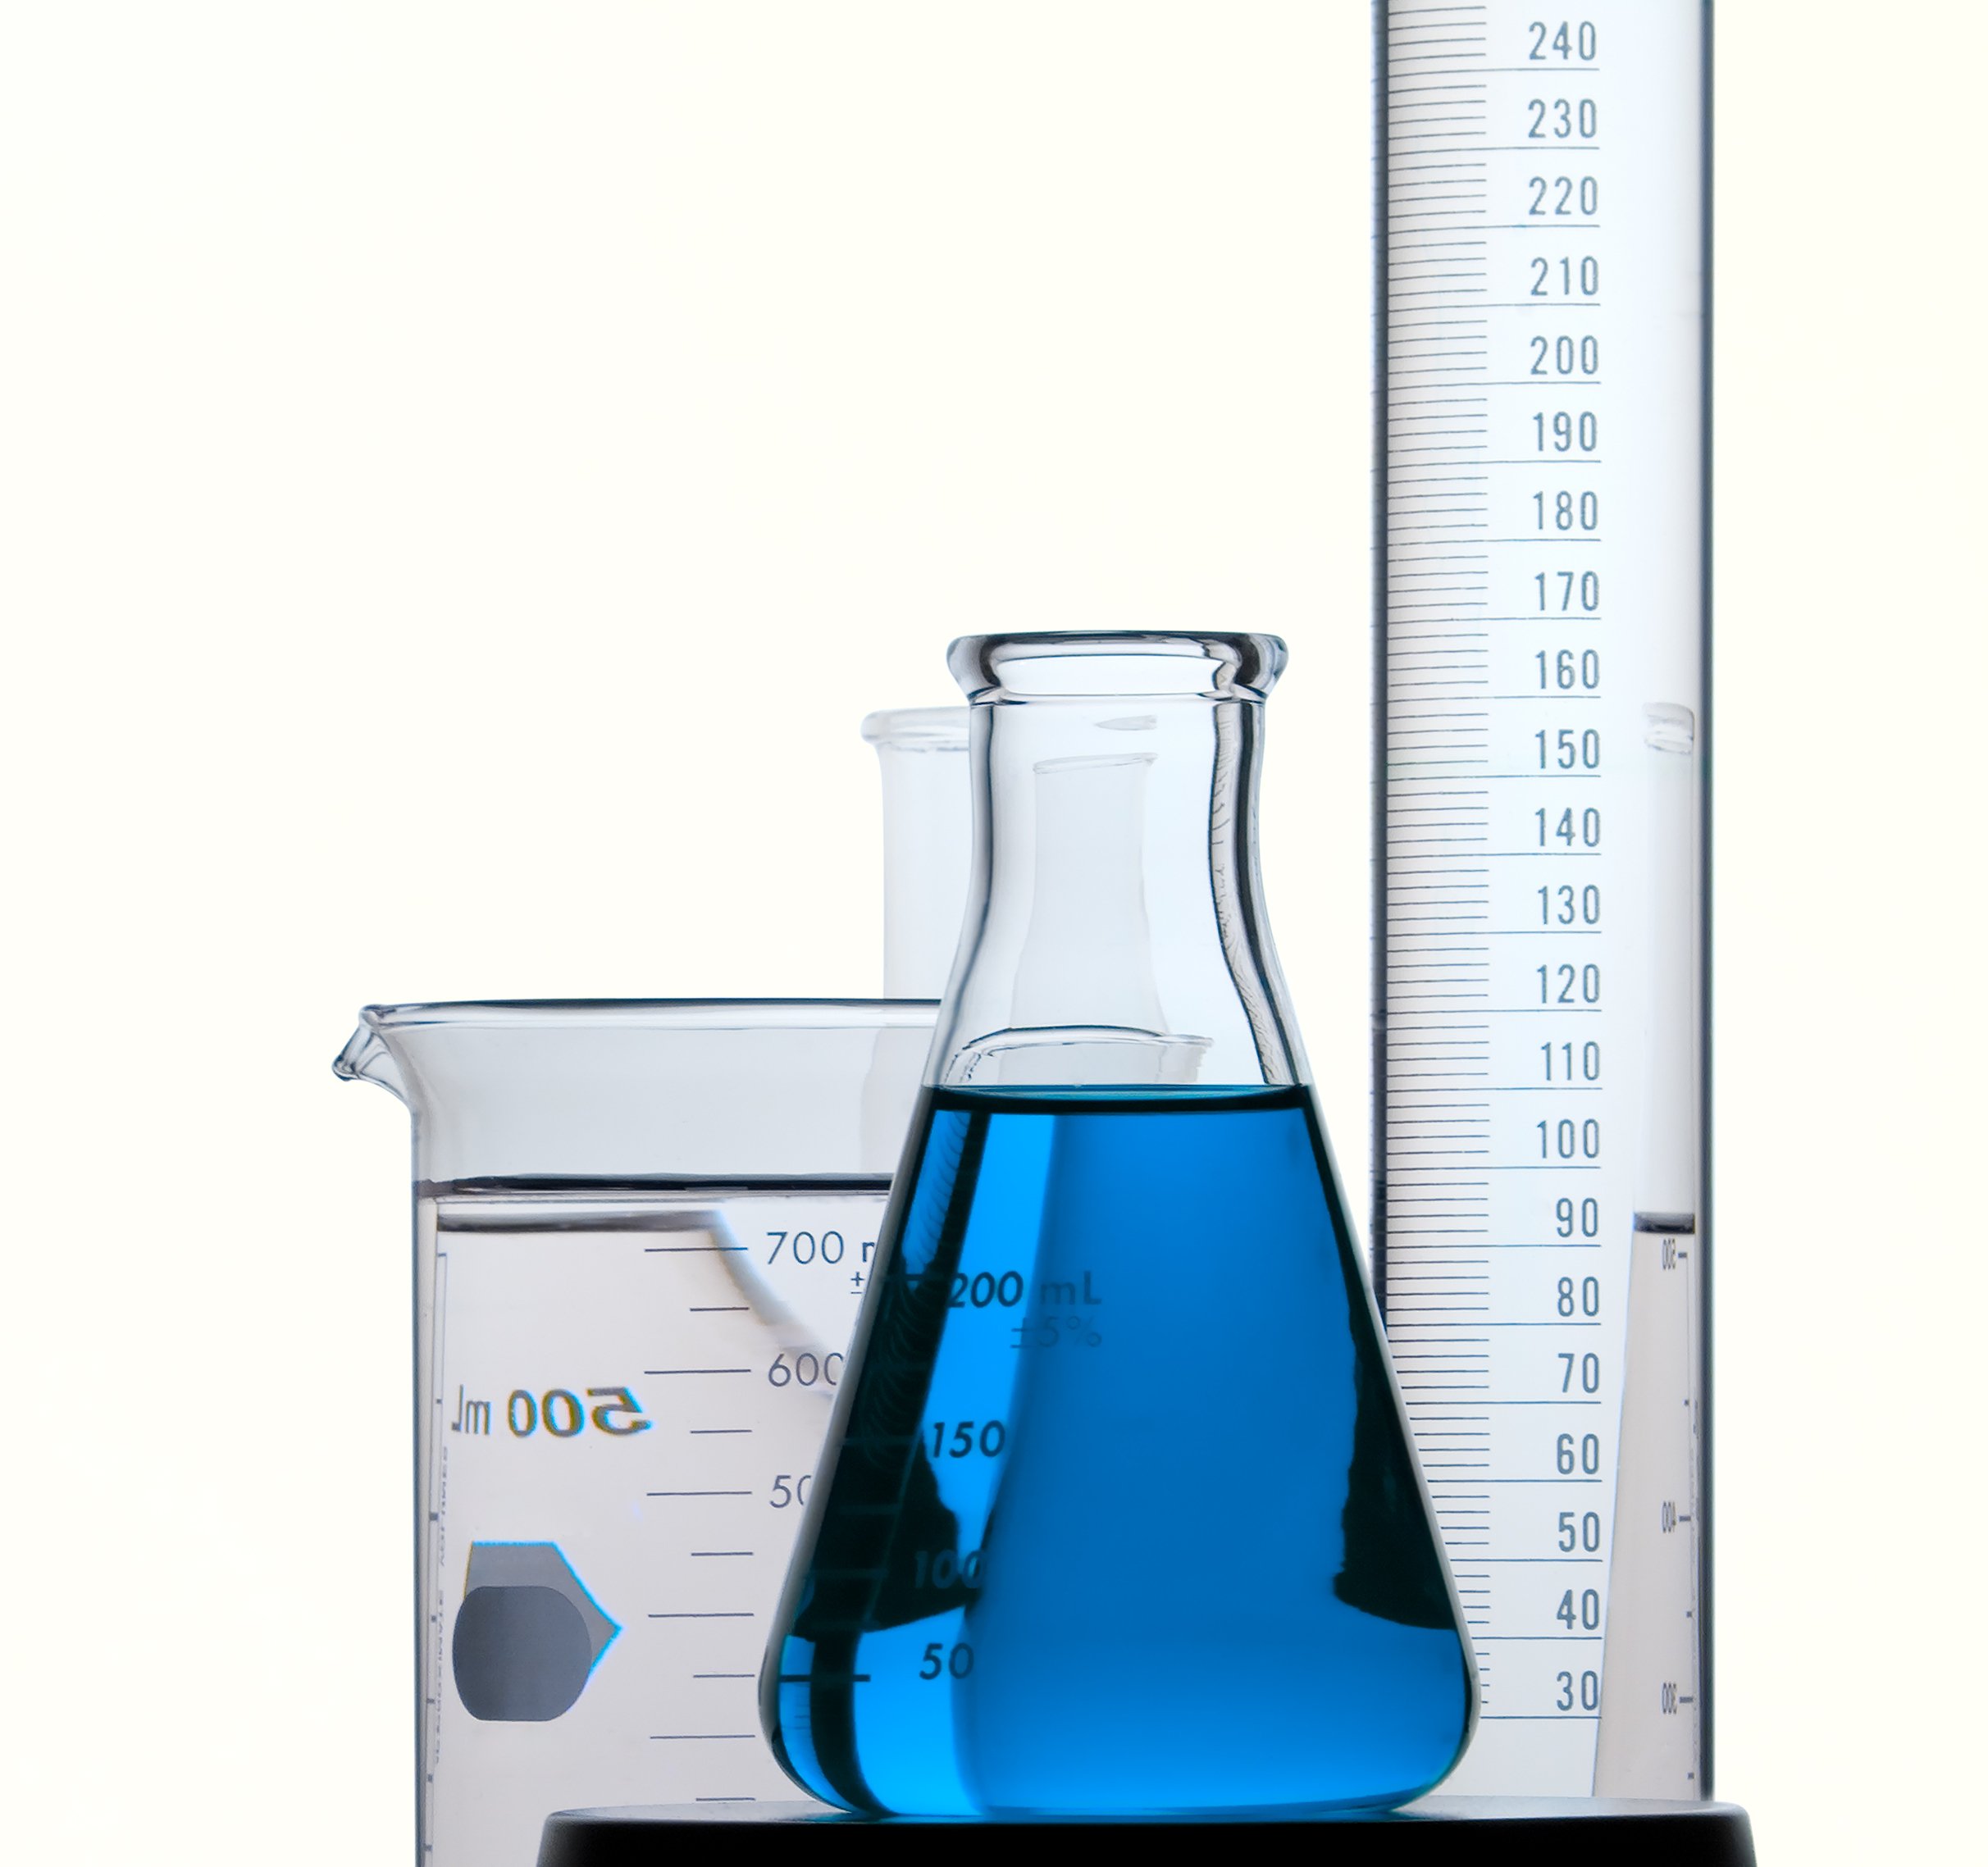 Methyl N-Amyl Ketone (MAK) Supplier & Distributor